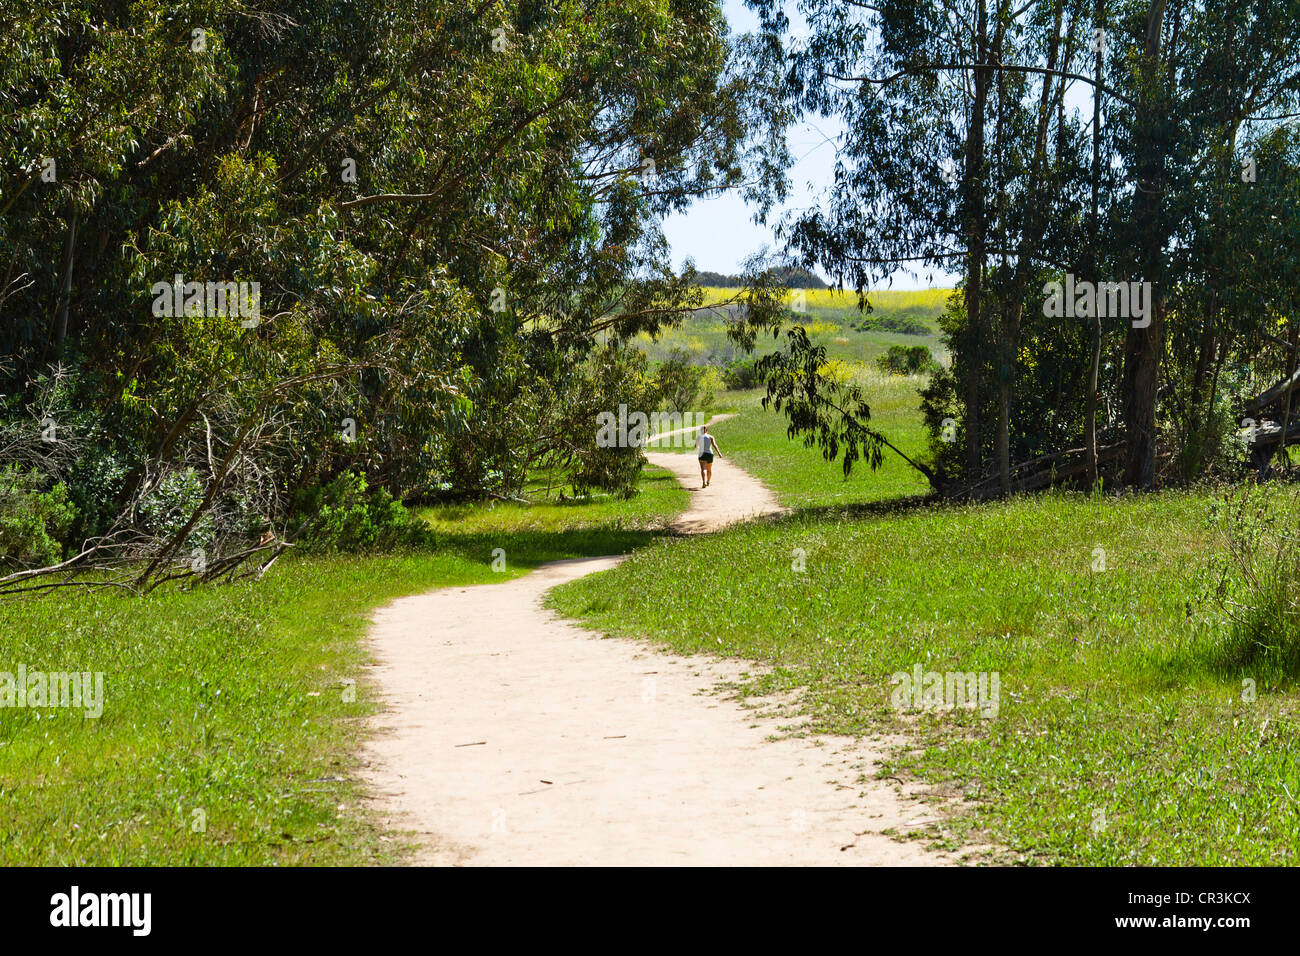 Woman walking on trail through trees in 'Santa Barbara' California Stock Photo